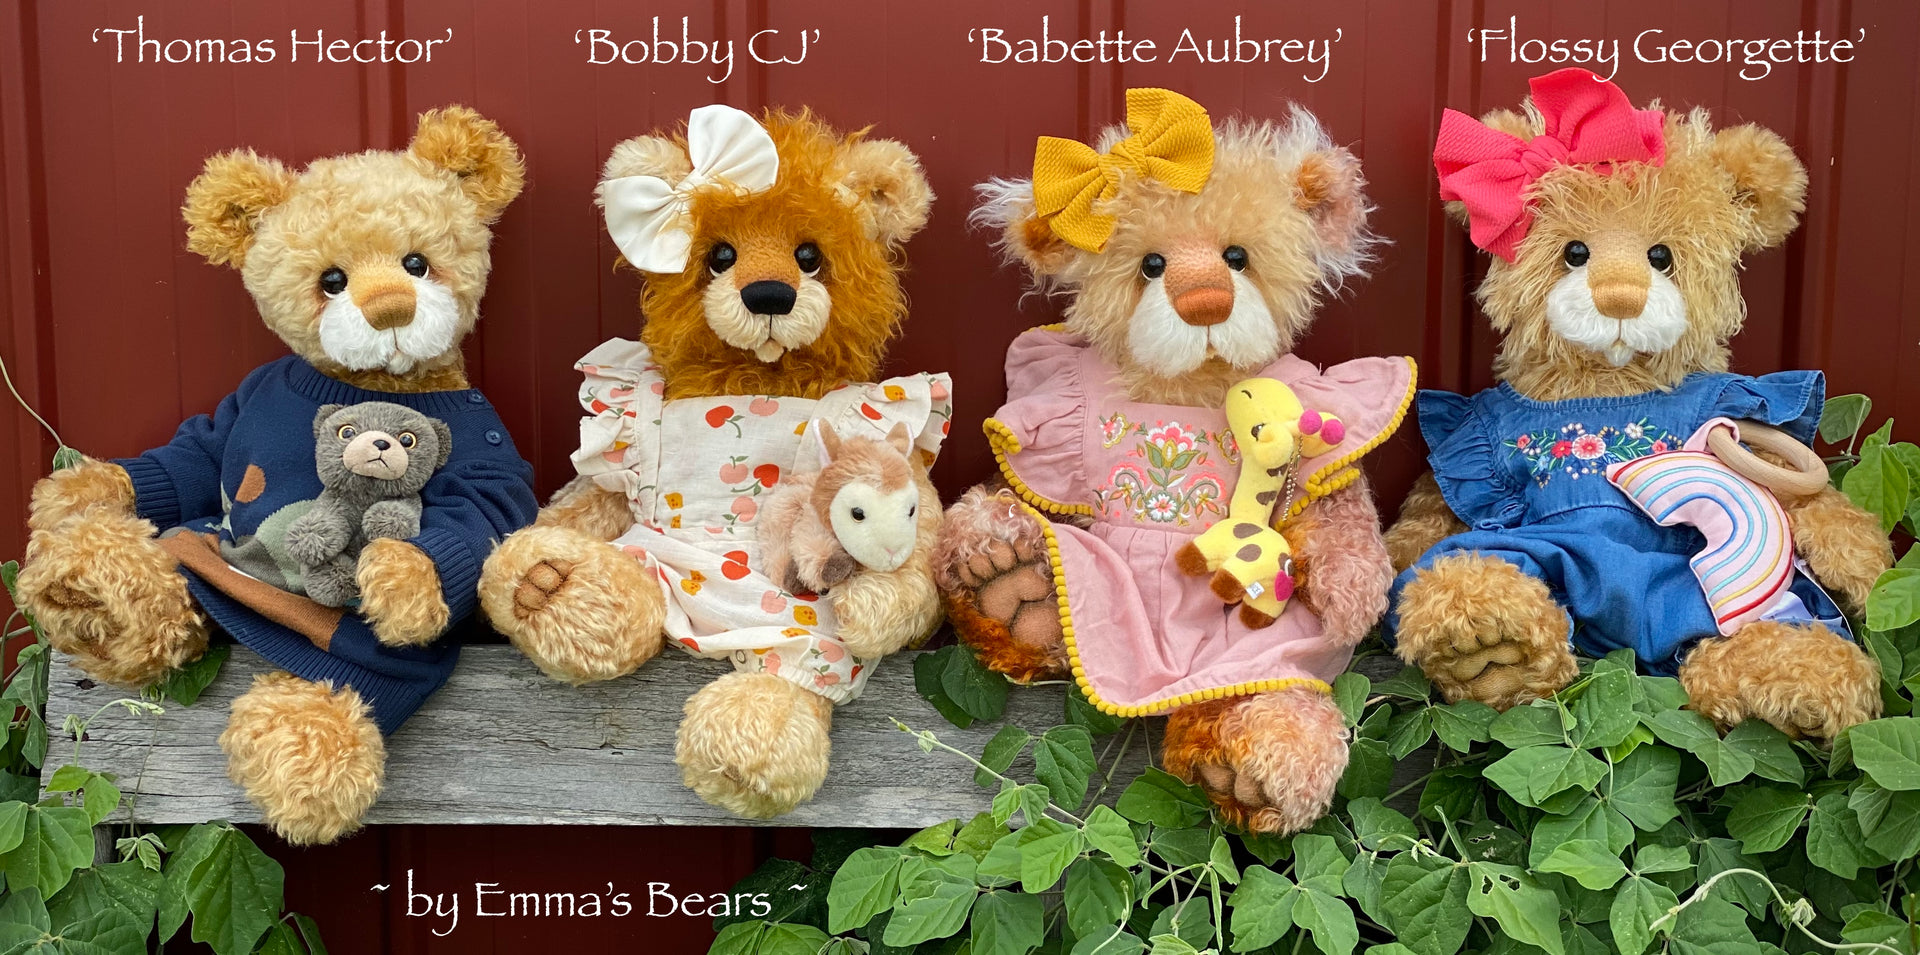 Bobby CJ - 18" Hand-Dyed Artist Baby Bear by Emma's Bears - OOAK